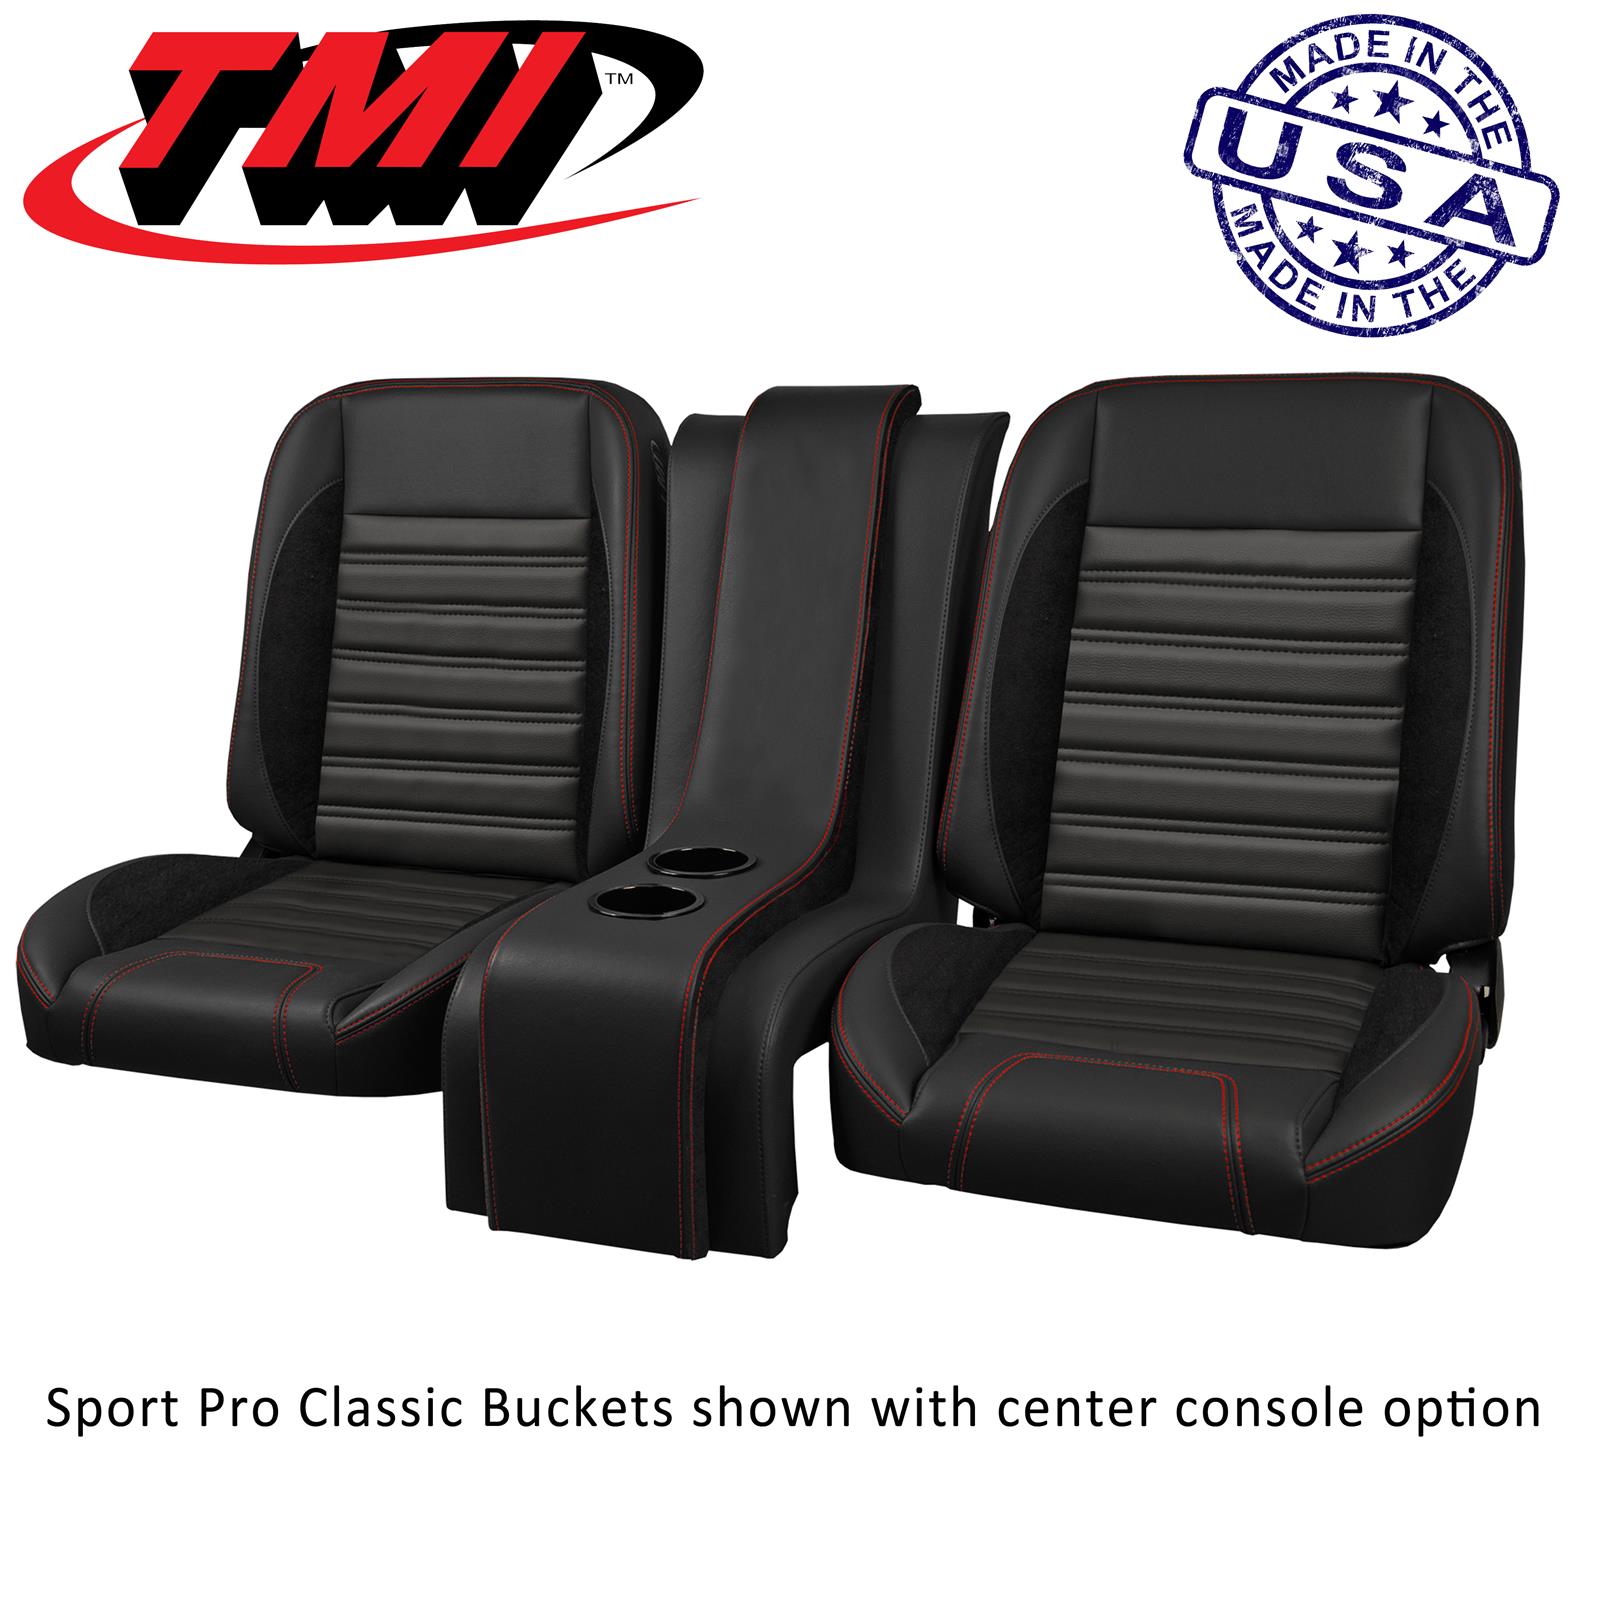 60-87 Chevy Truck | TMI Pro-Classic Sport Series Bucket Seats